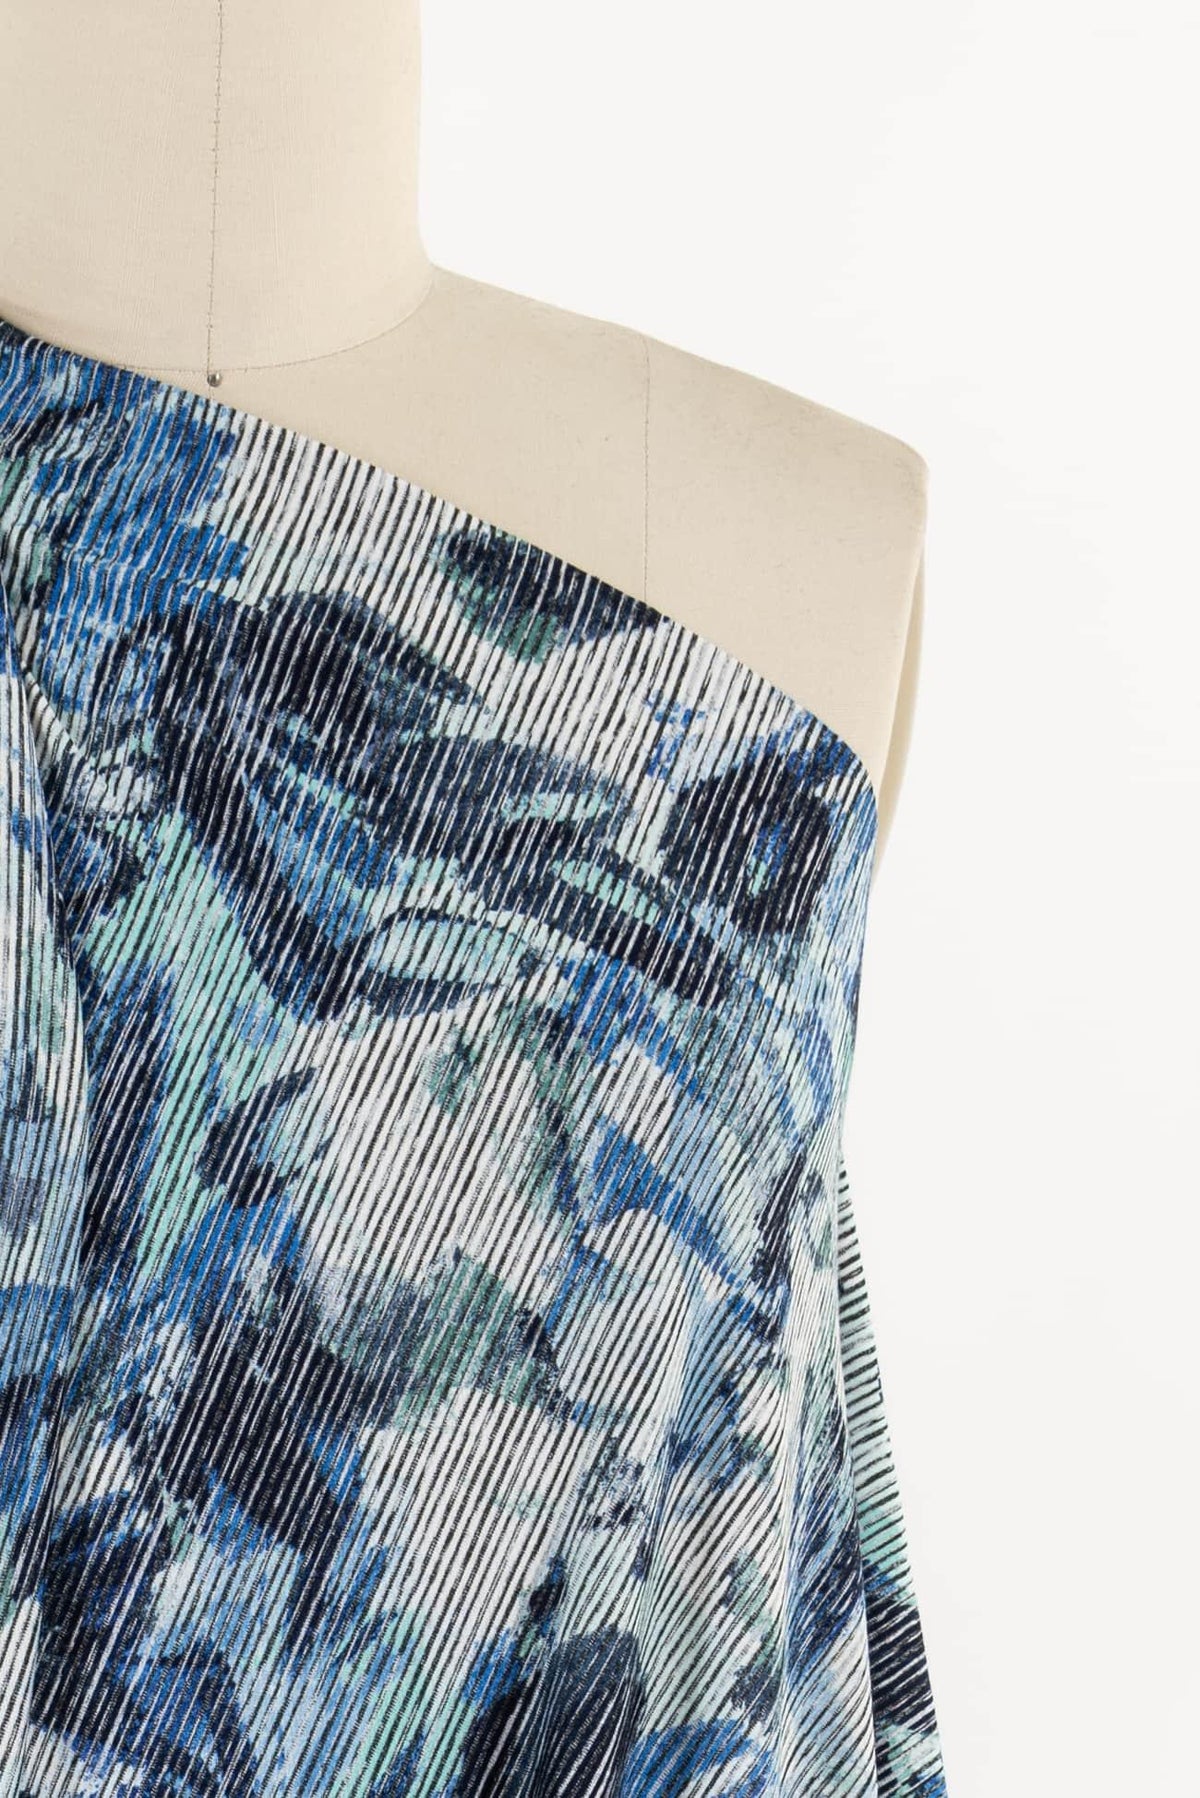 Haven Viscose/Poly Knit - Marcy Tilton Fabrics